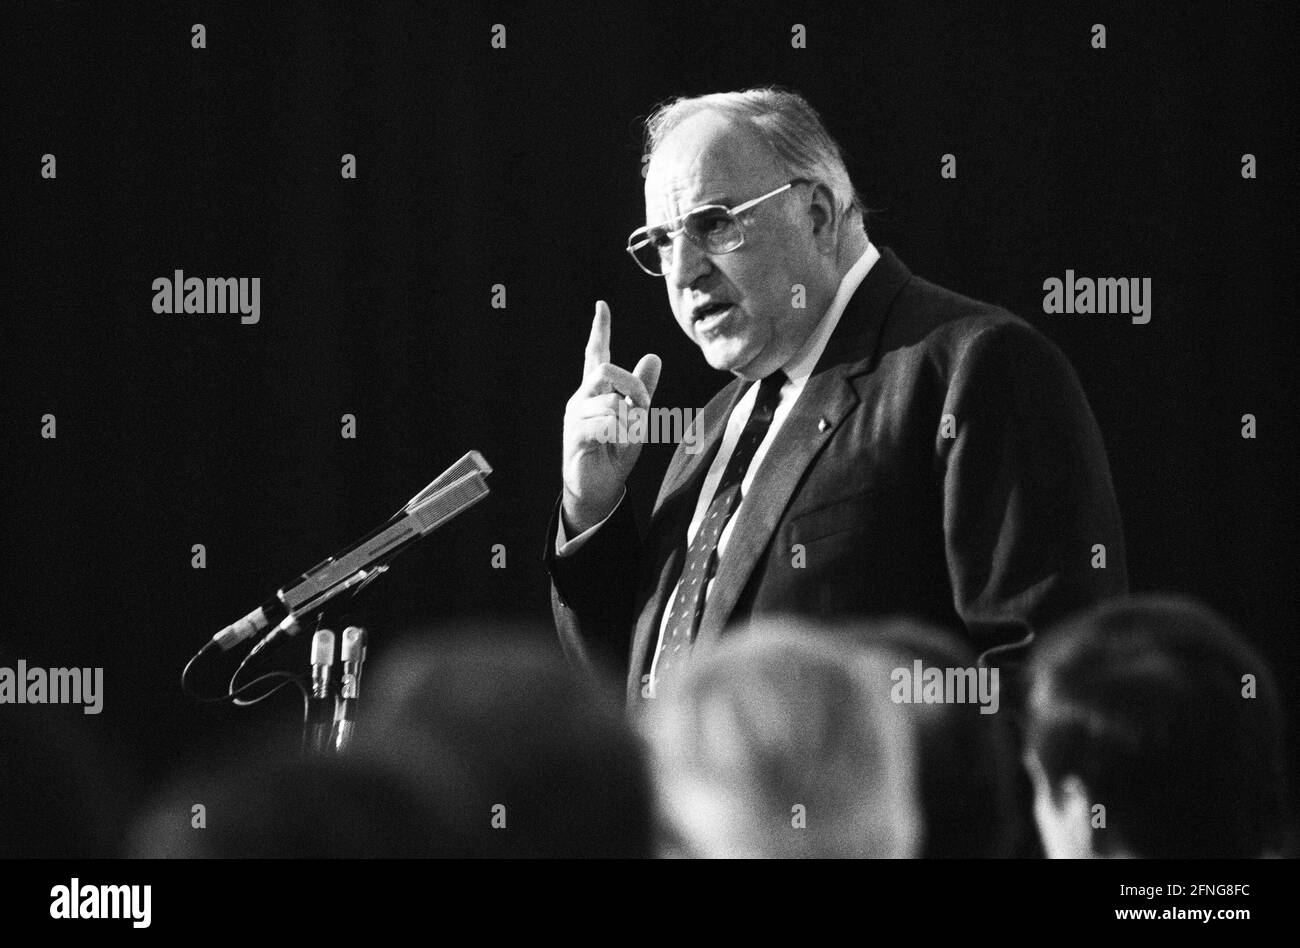 Germany, Hanover, 13.10.1989. Archive No: 09-52-06 CDU state party conference Lower Saxony Photo: CDU Federal Chairman Helmut Kohl [automated translation] Stock Photo